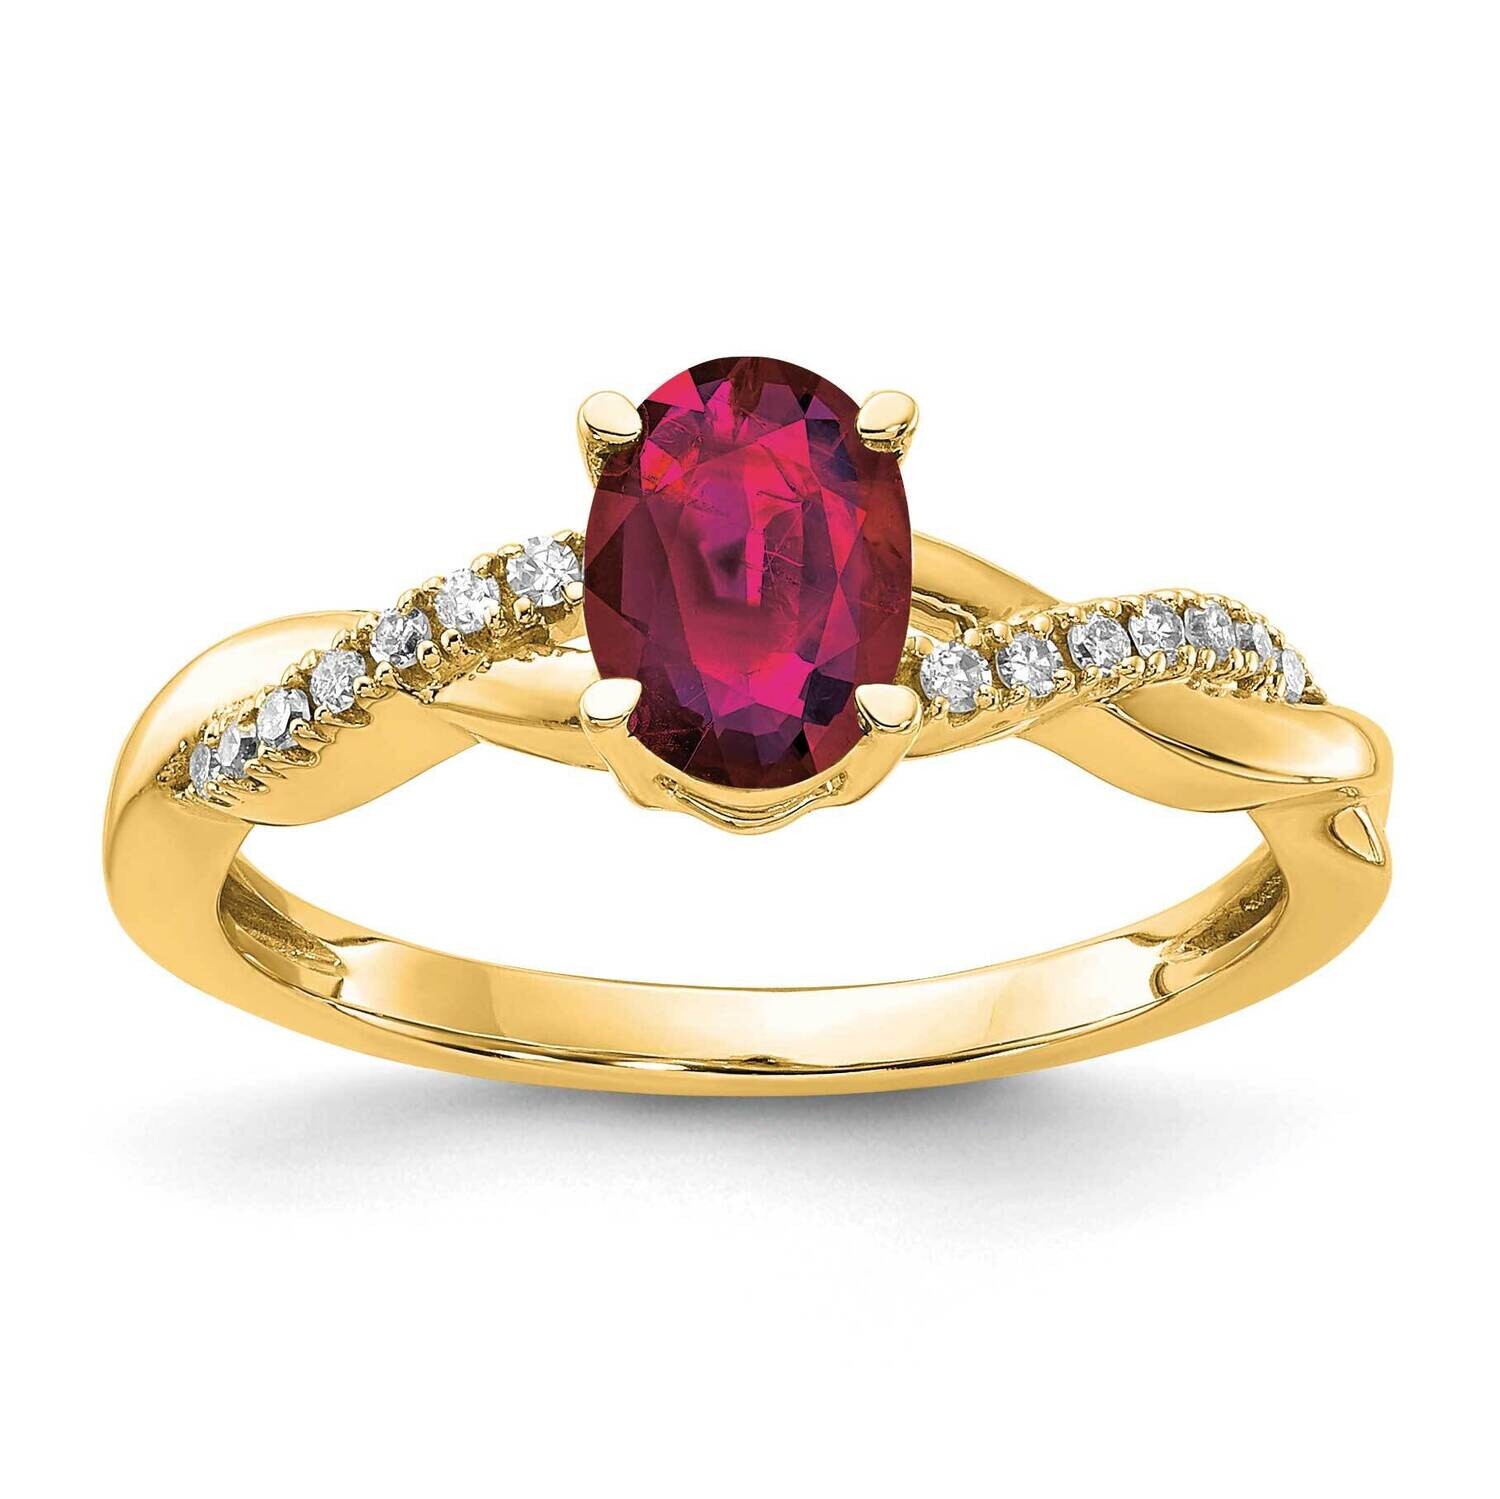 Oval Created Ruby Diamond Ring 10k Gold RM4235-CRU-008-1YA